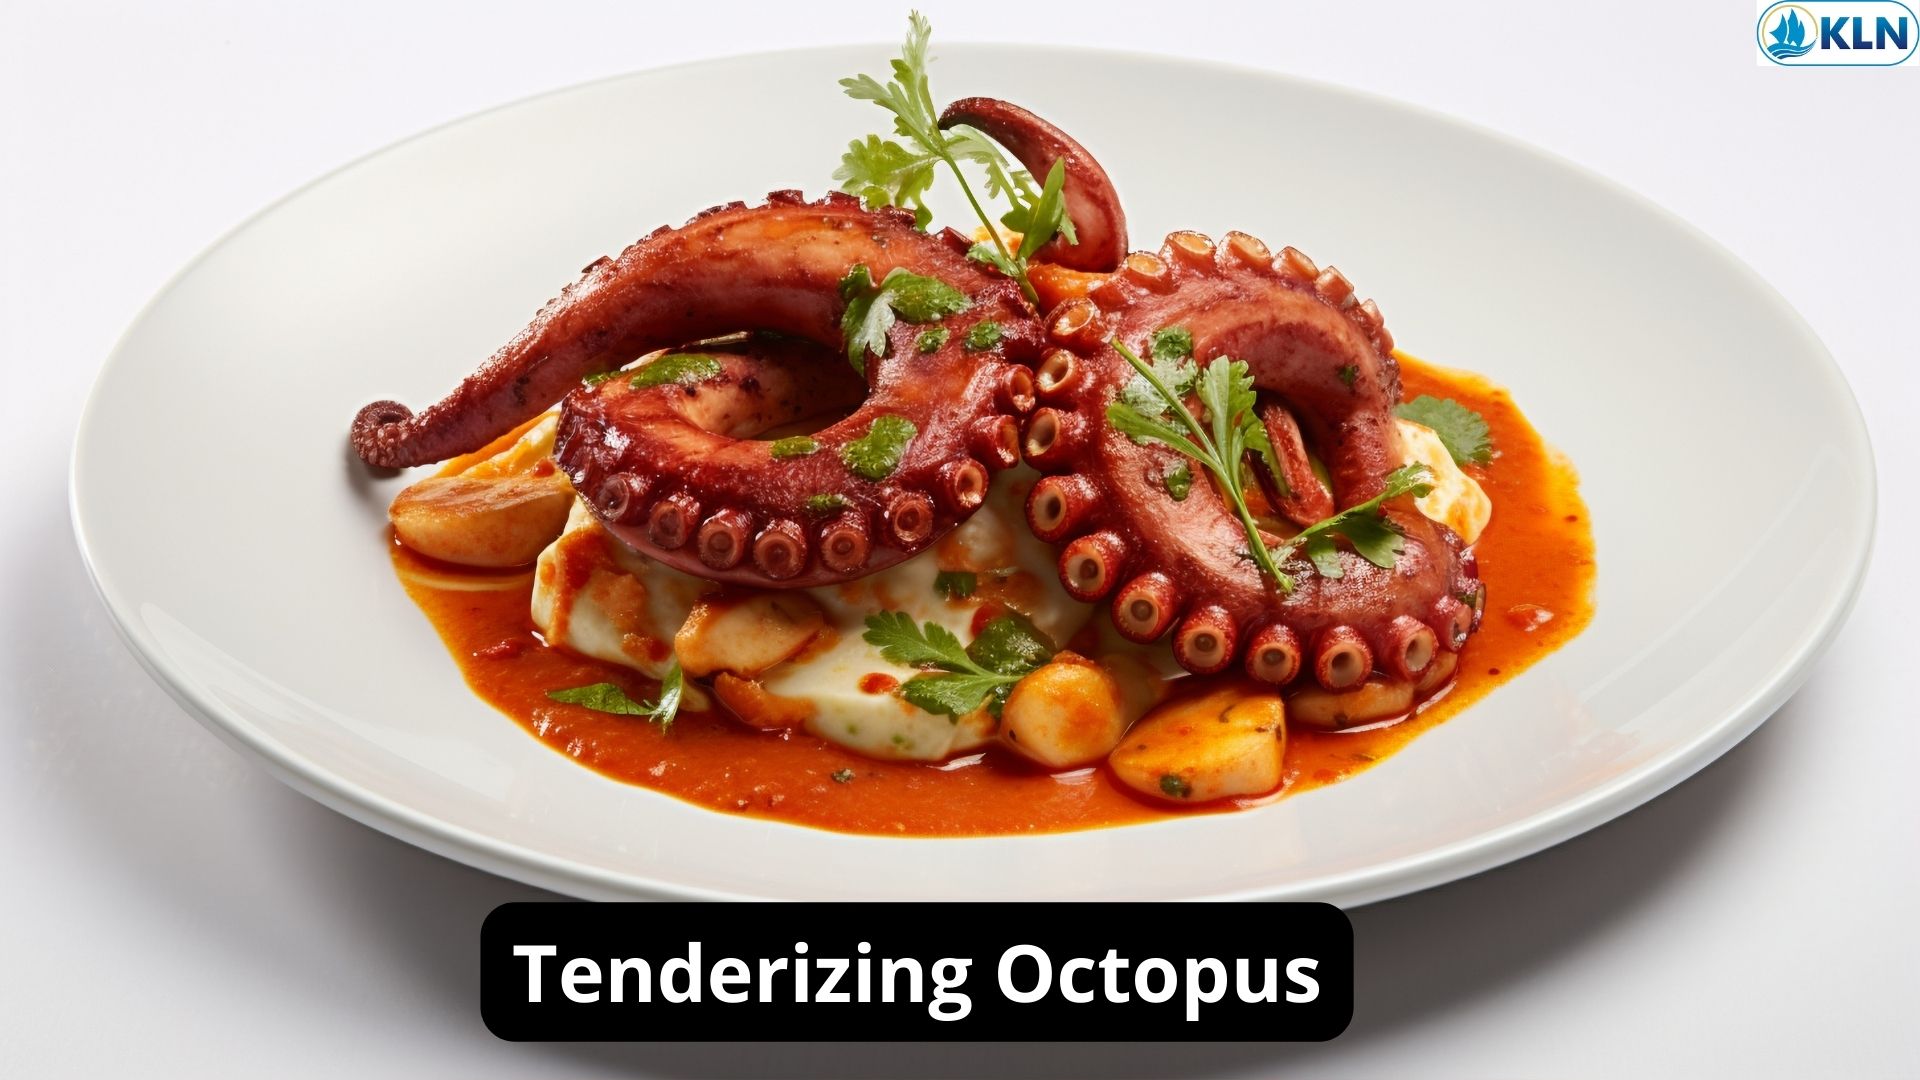 Tenderizing Octopus